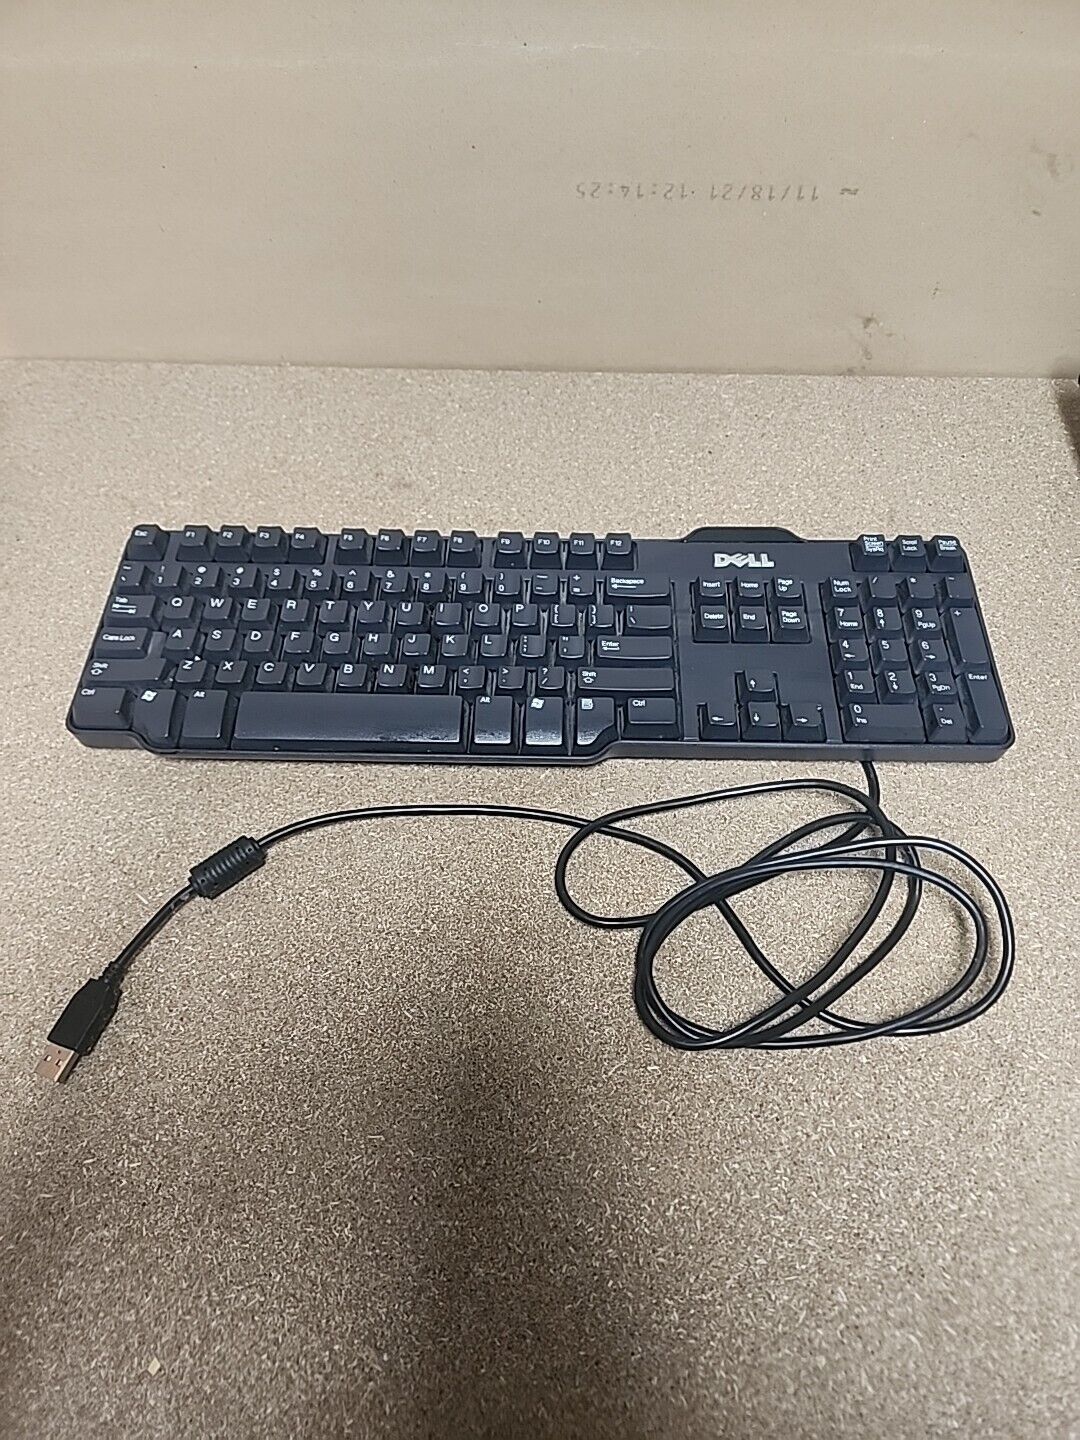 Dell Genuine SK-8115 ODJ331 Black Ergonomic 104 Keys USB-Wired Keyboard